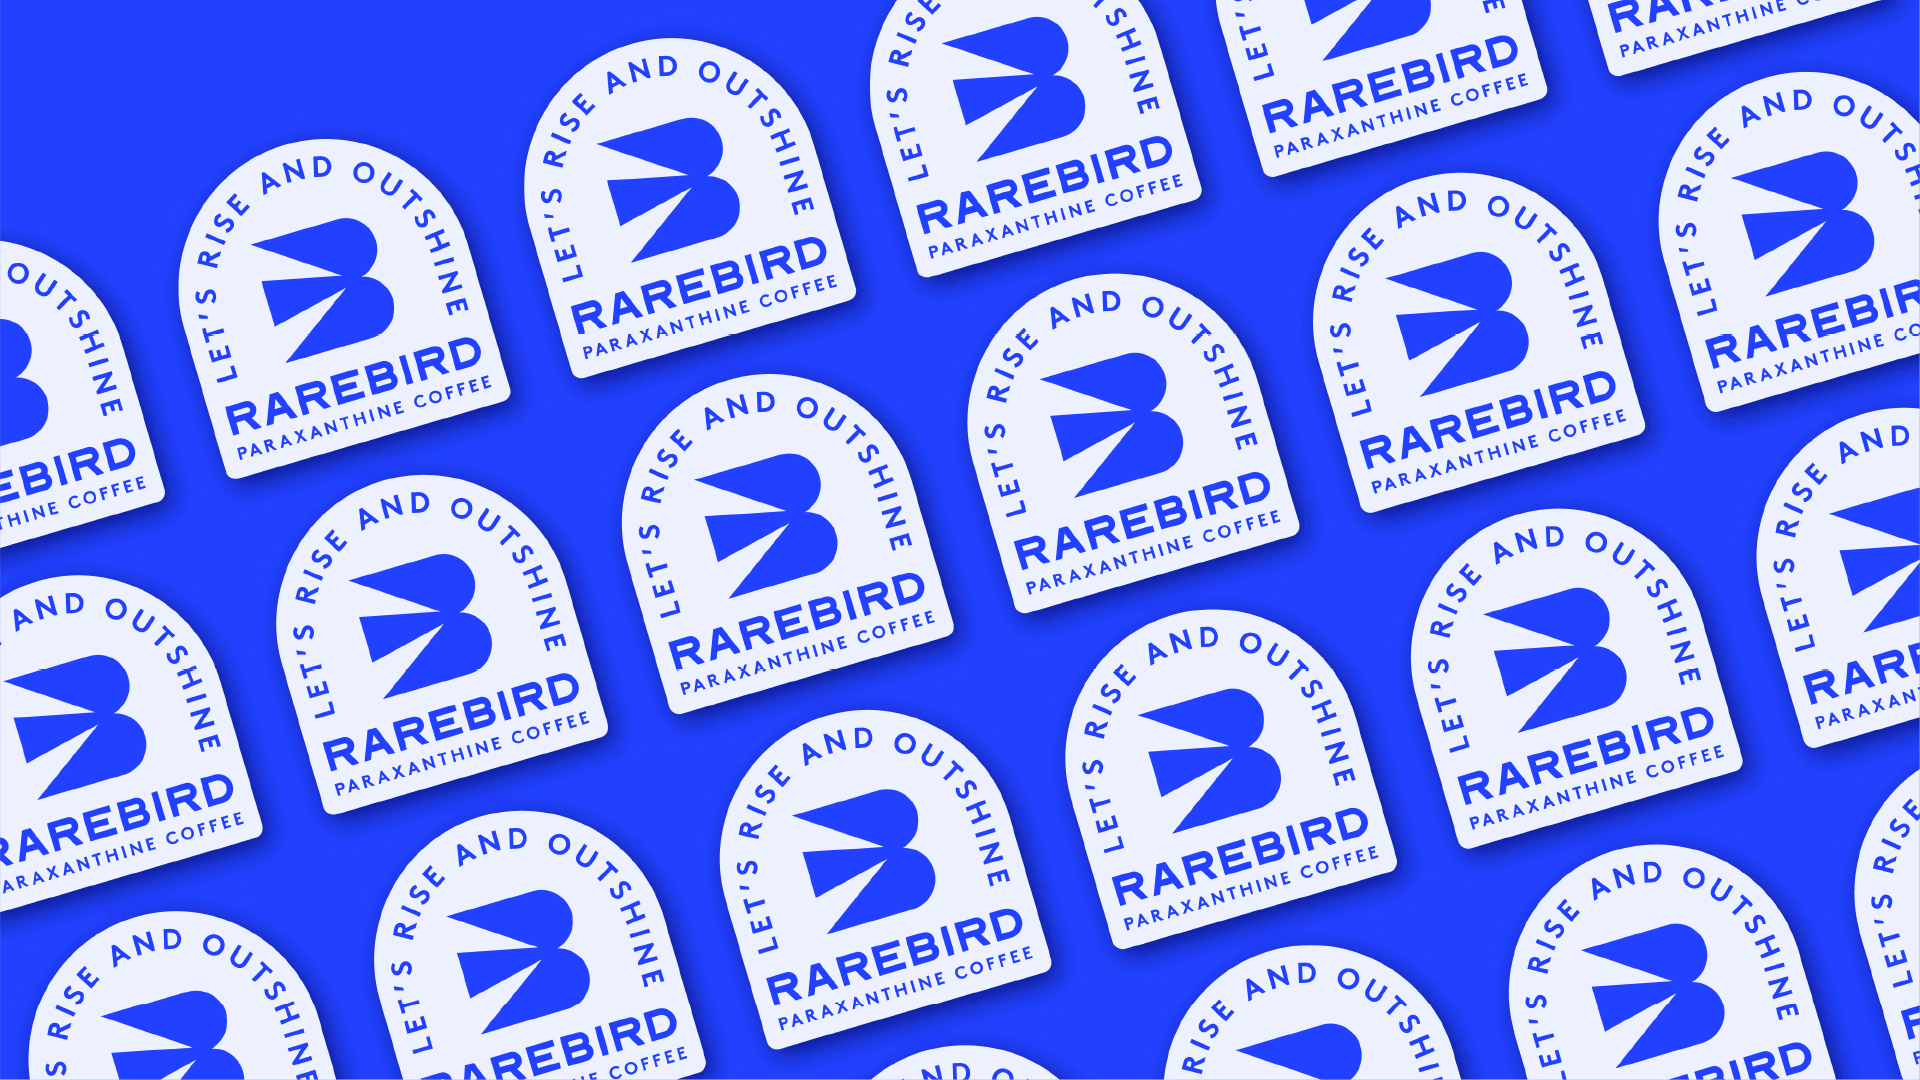 rarebird-paraxanthine-coffee-sticker.png